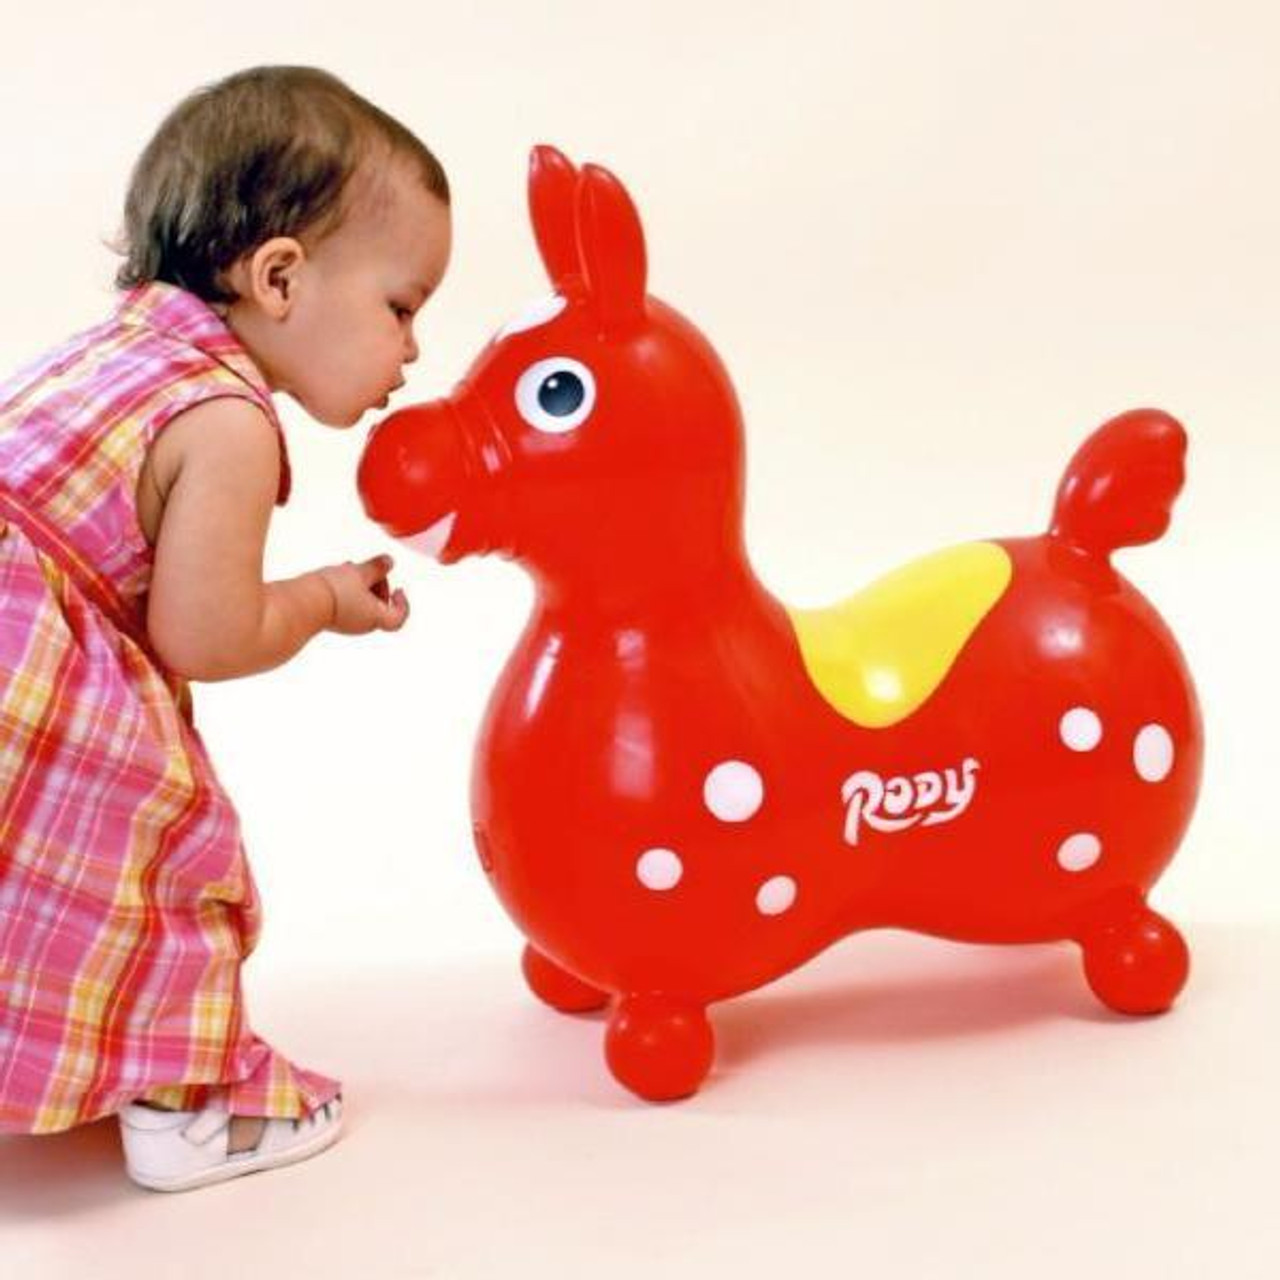 rody toy horse